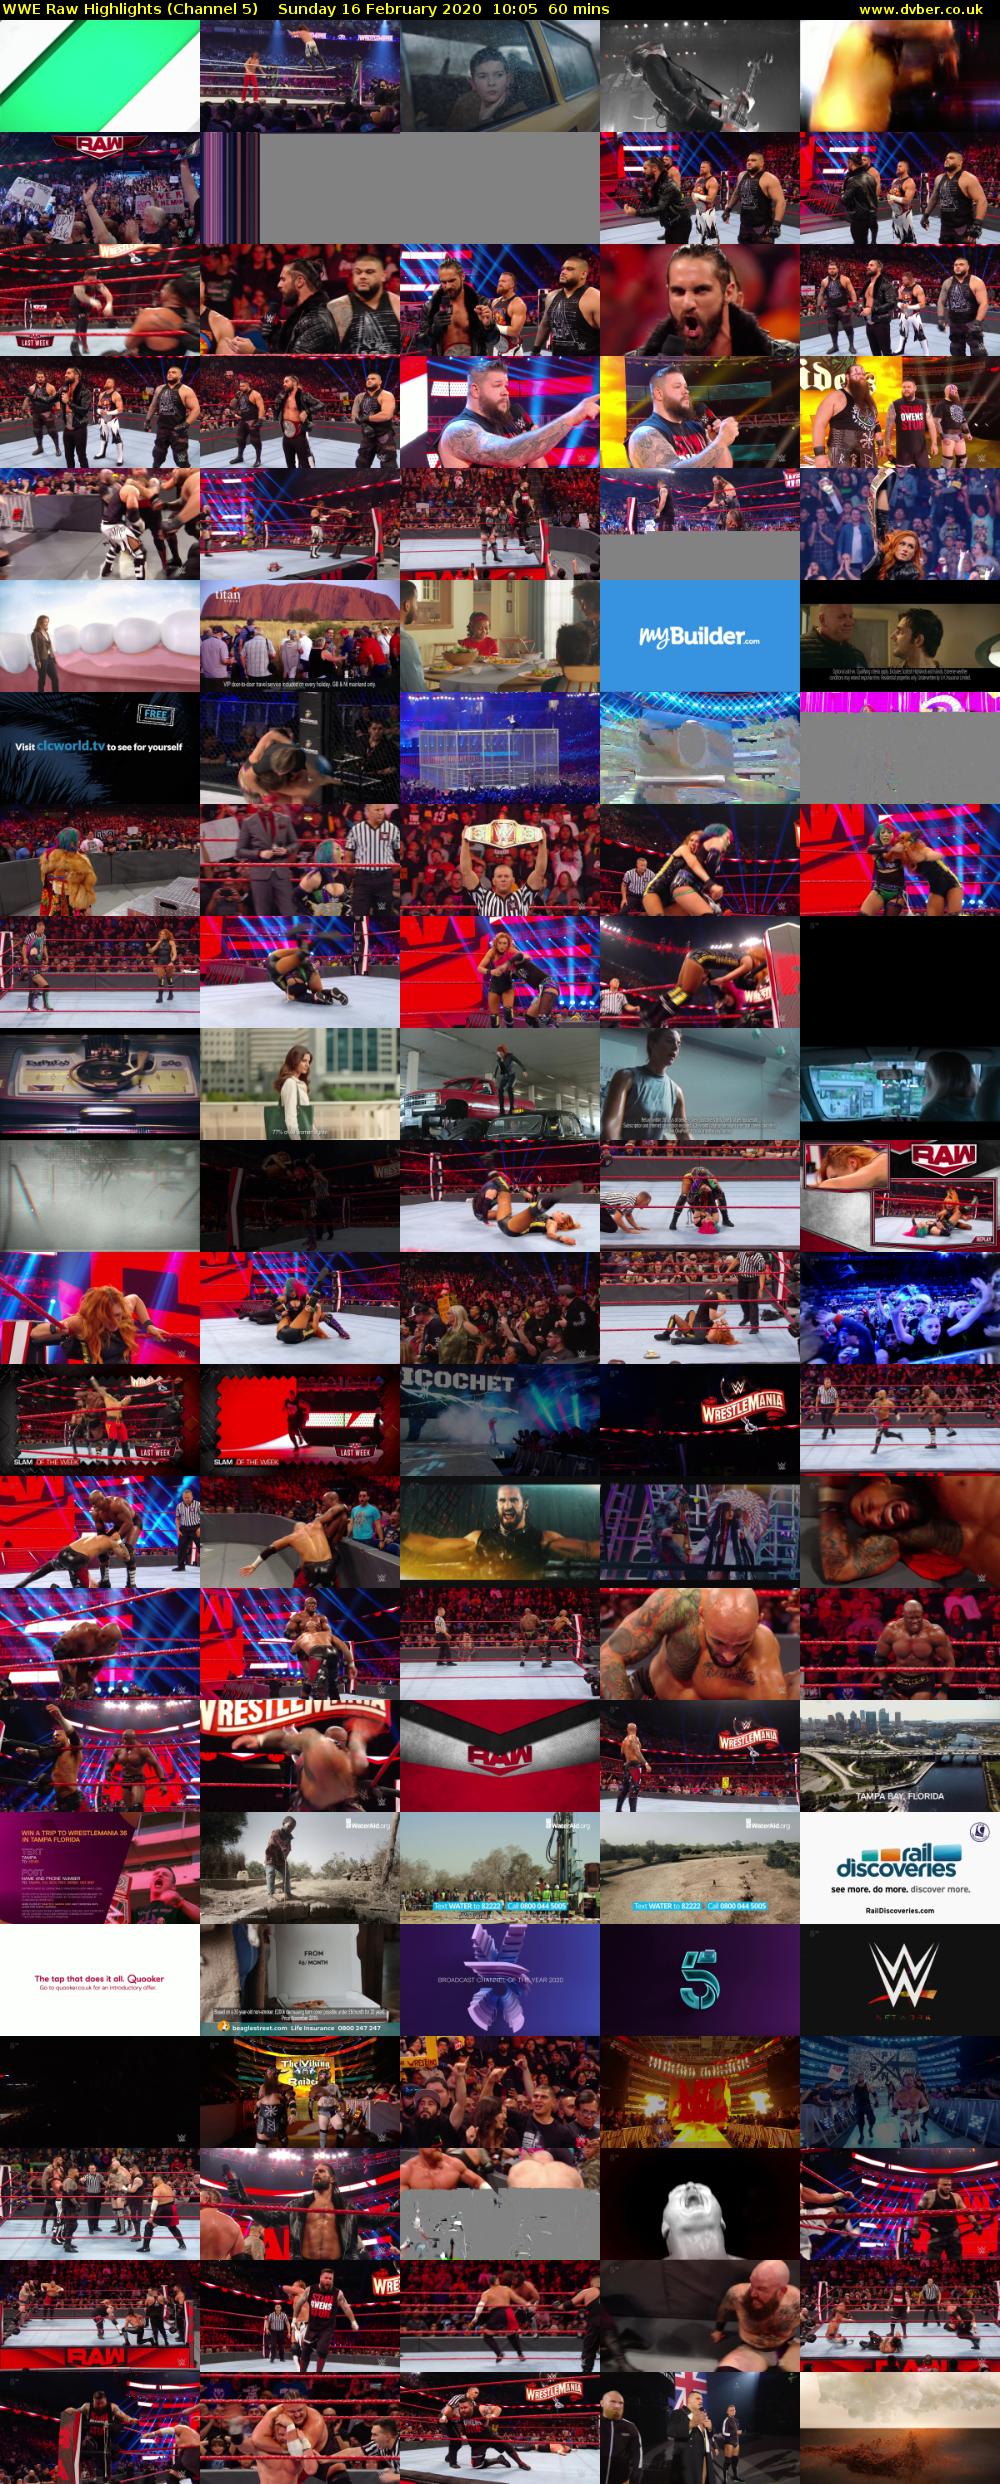 WWE Raw Highlights (Channel 5) Sunday 16 February 2020 10:05 - 11:05